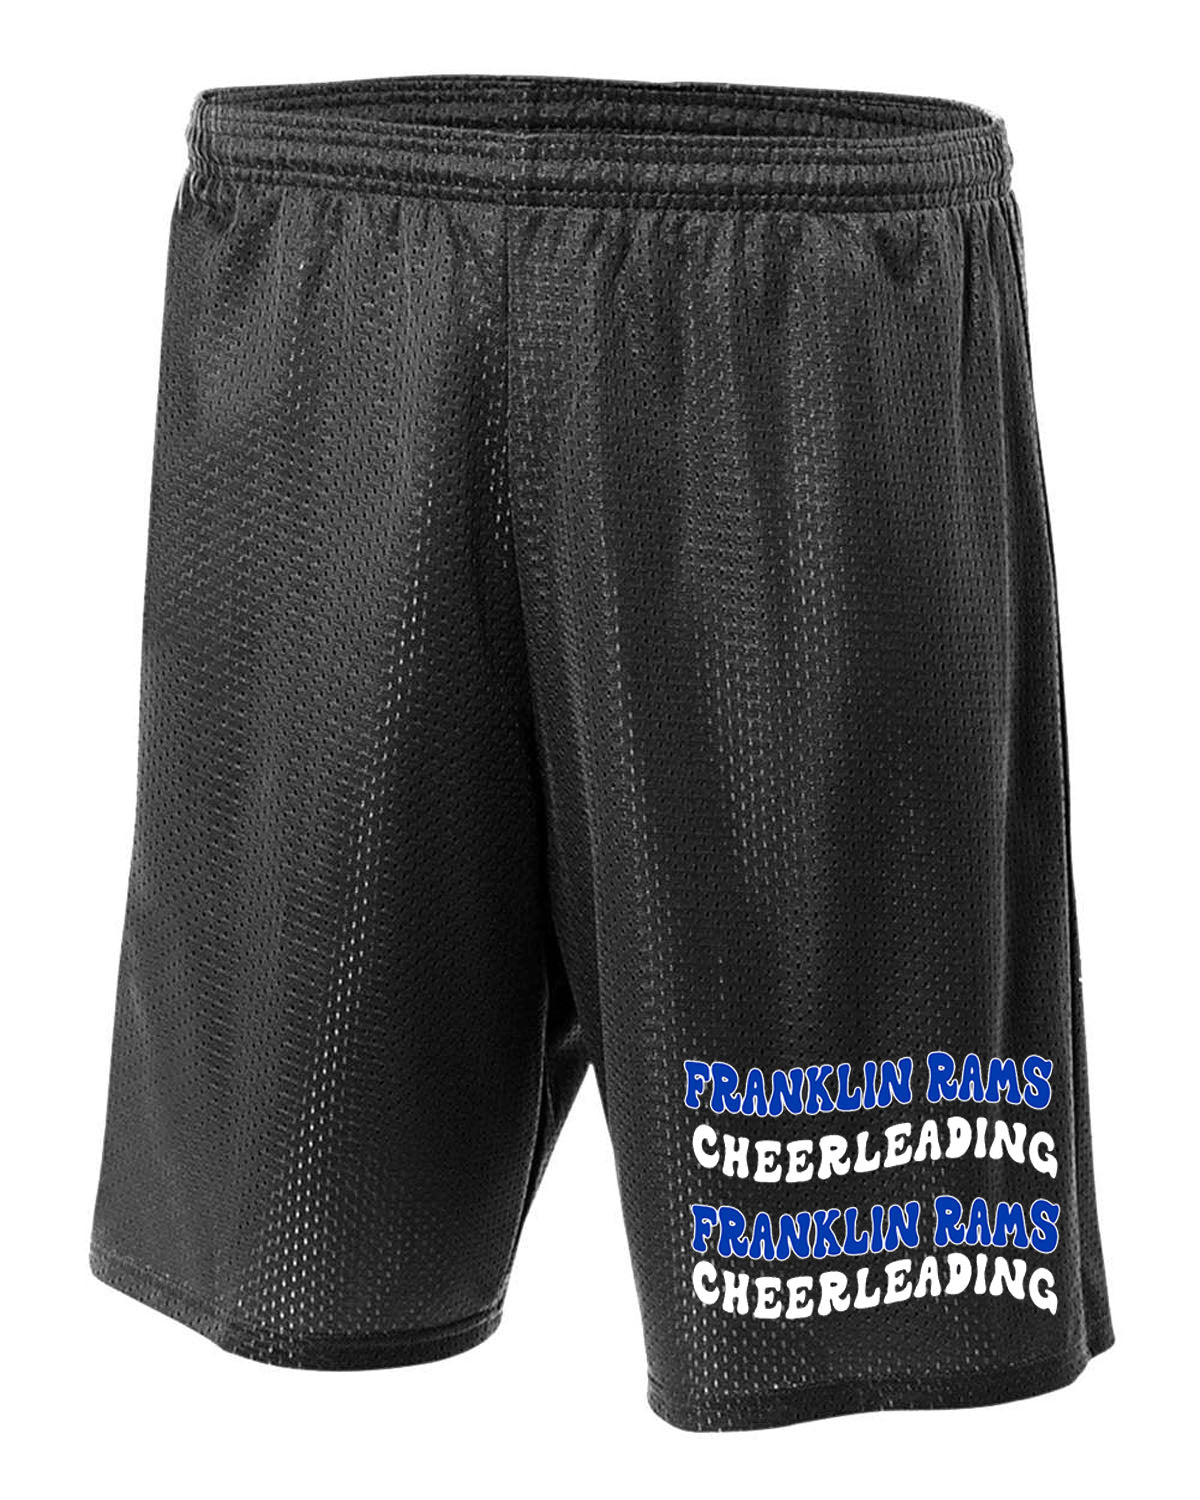 Franklin Cheer Design 1 Mesh Shorts